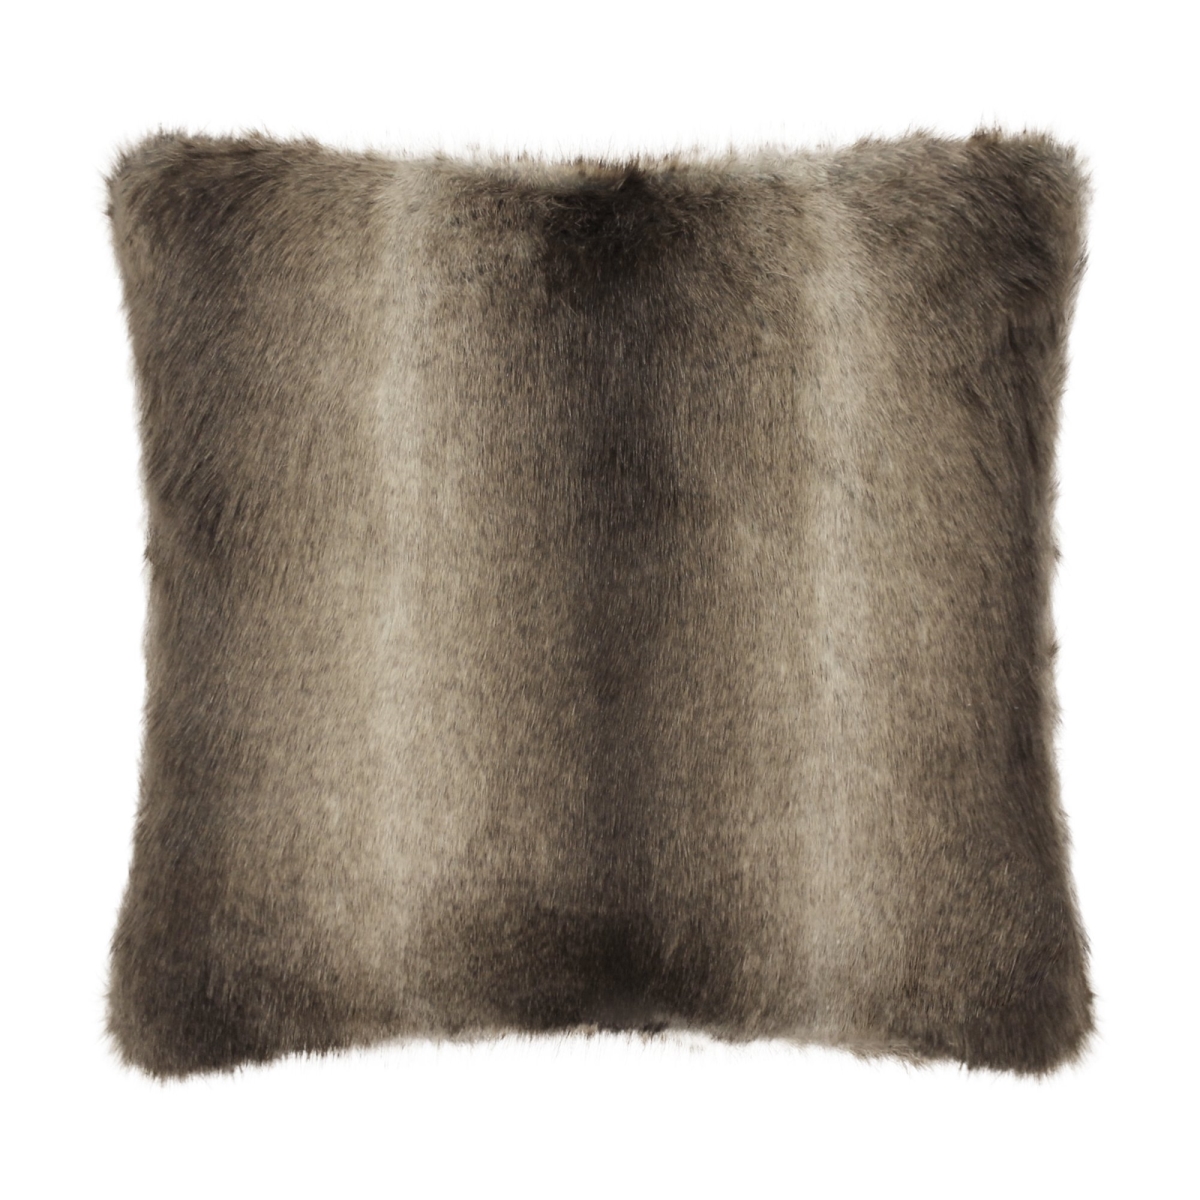 Sq-ph-wbeff-1818 18 X 18 In. Wolf Faux Fur Cushion Cover - Beige